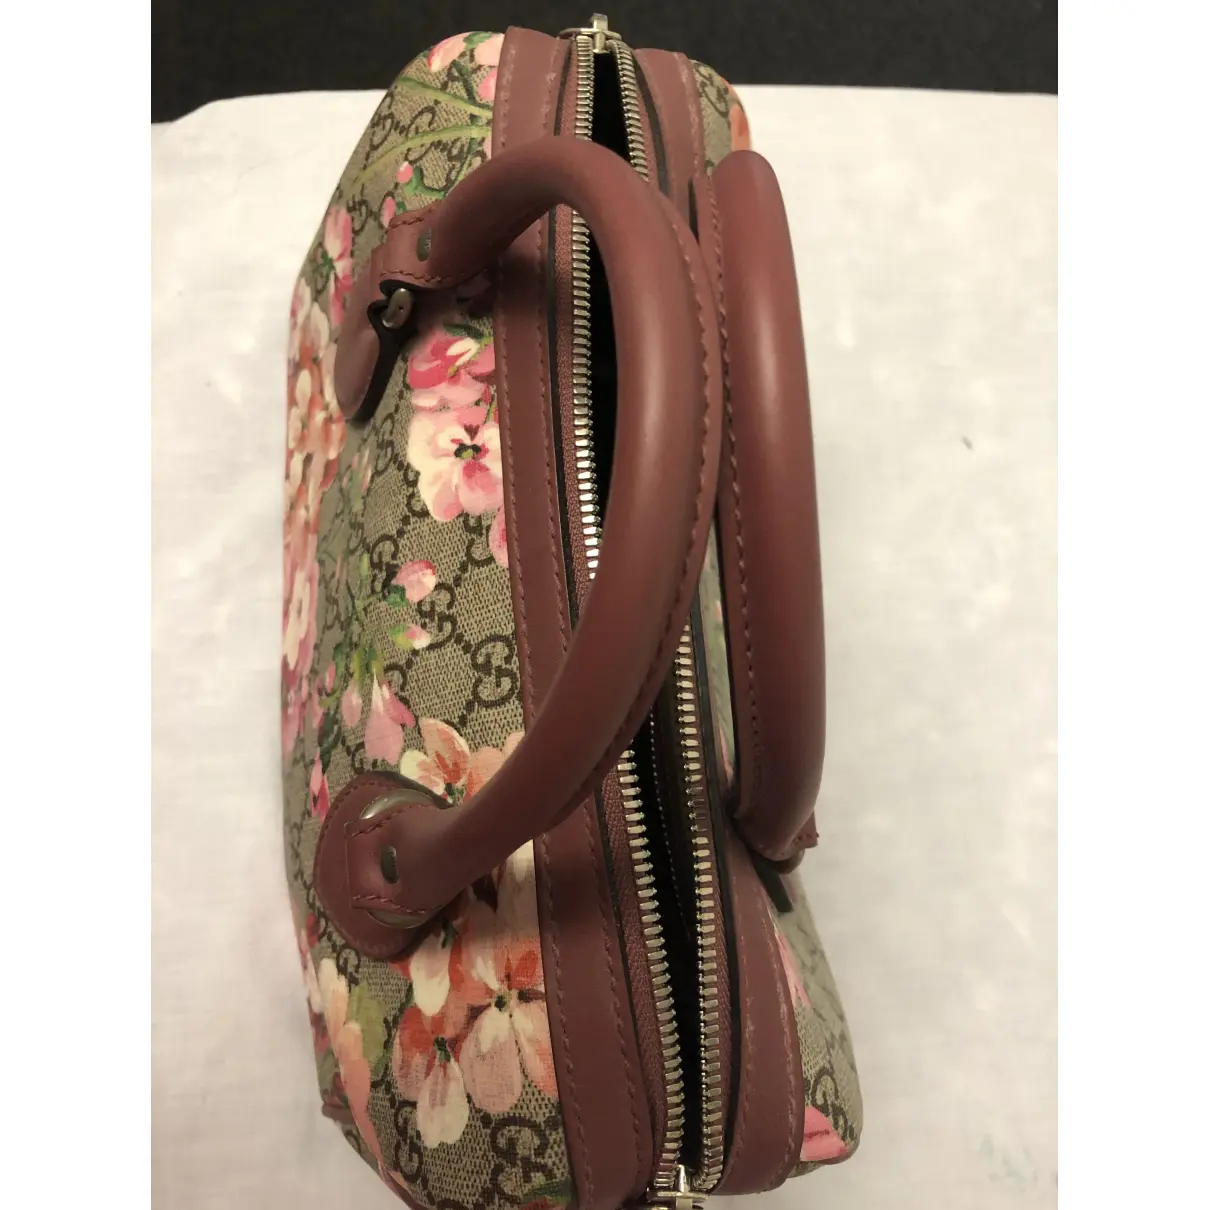 GUCCI blooms GG supreme top handle bag Gucci